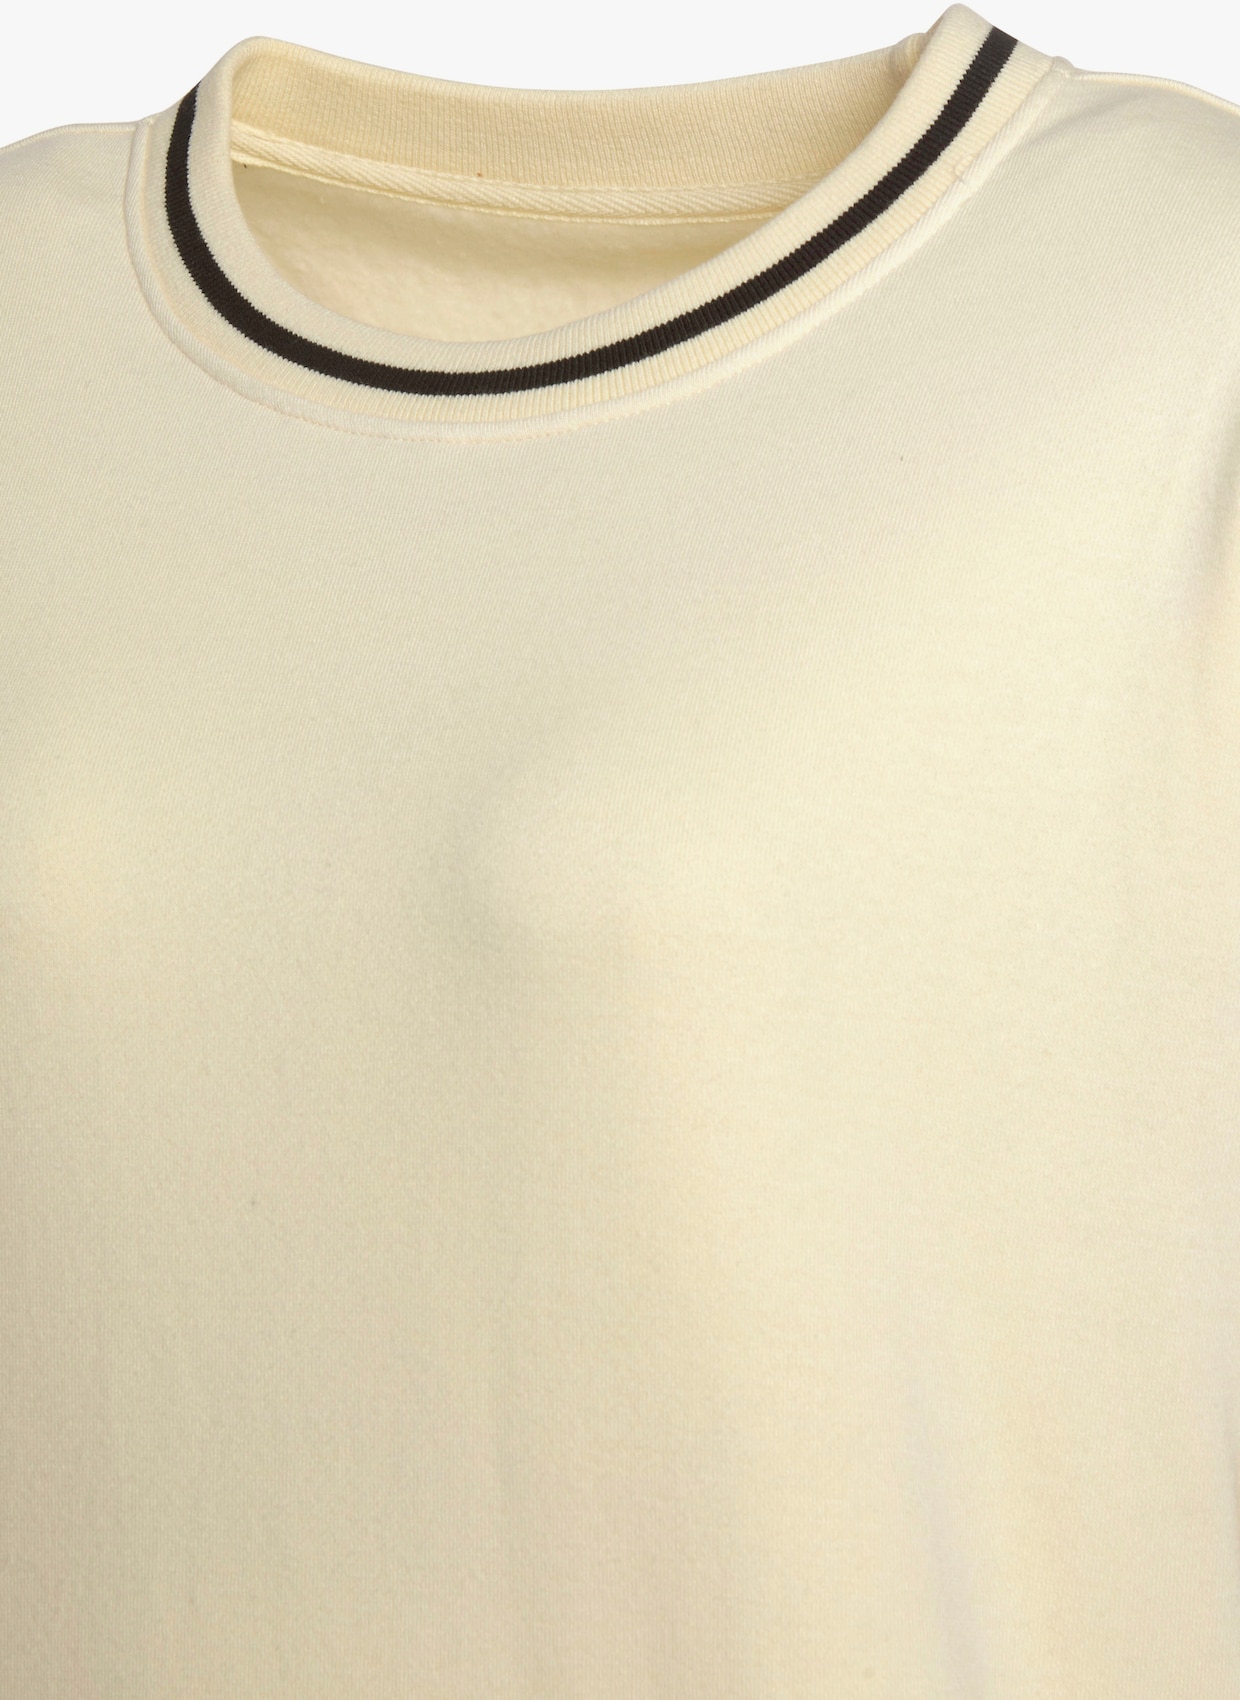 LASCANA Sweat-shirt - beige clair